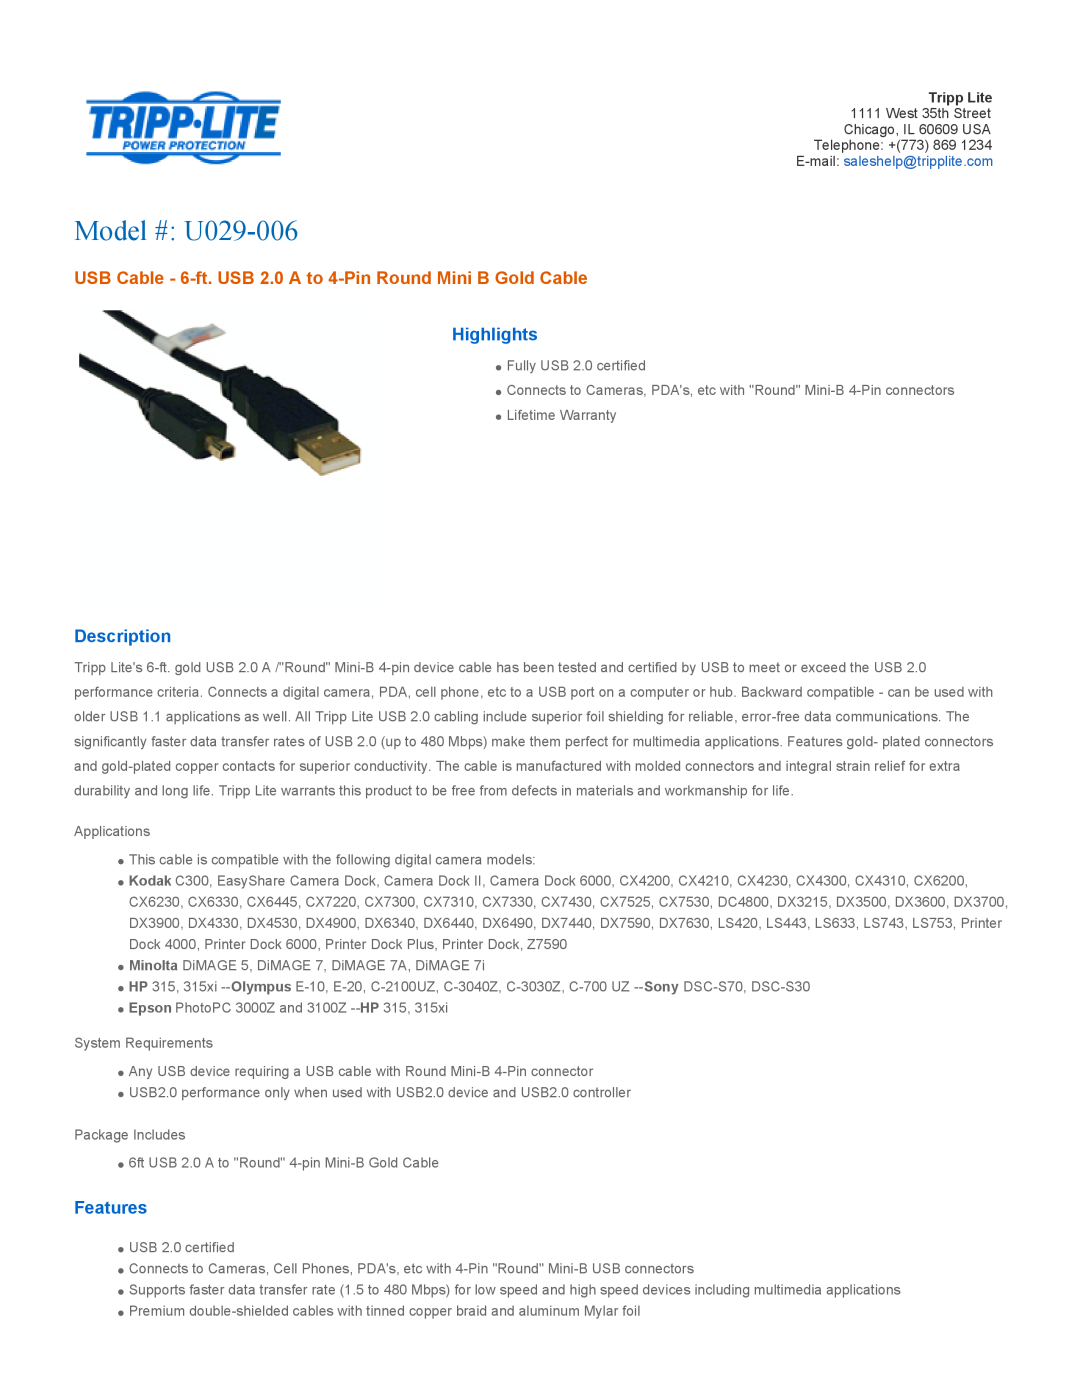 Tripp Lite warranty Highlights, Description, Features, Model # U029-006 